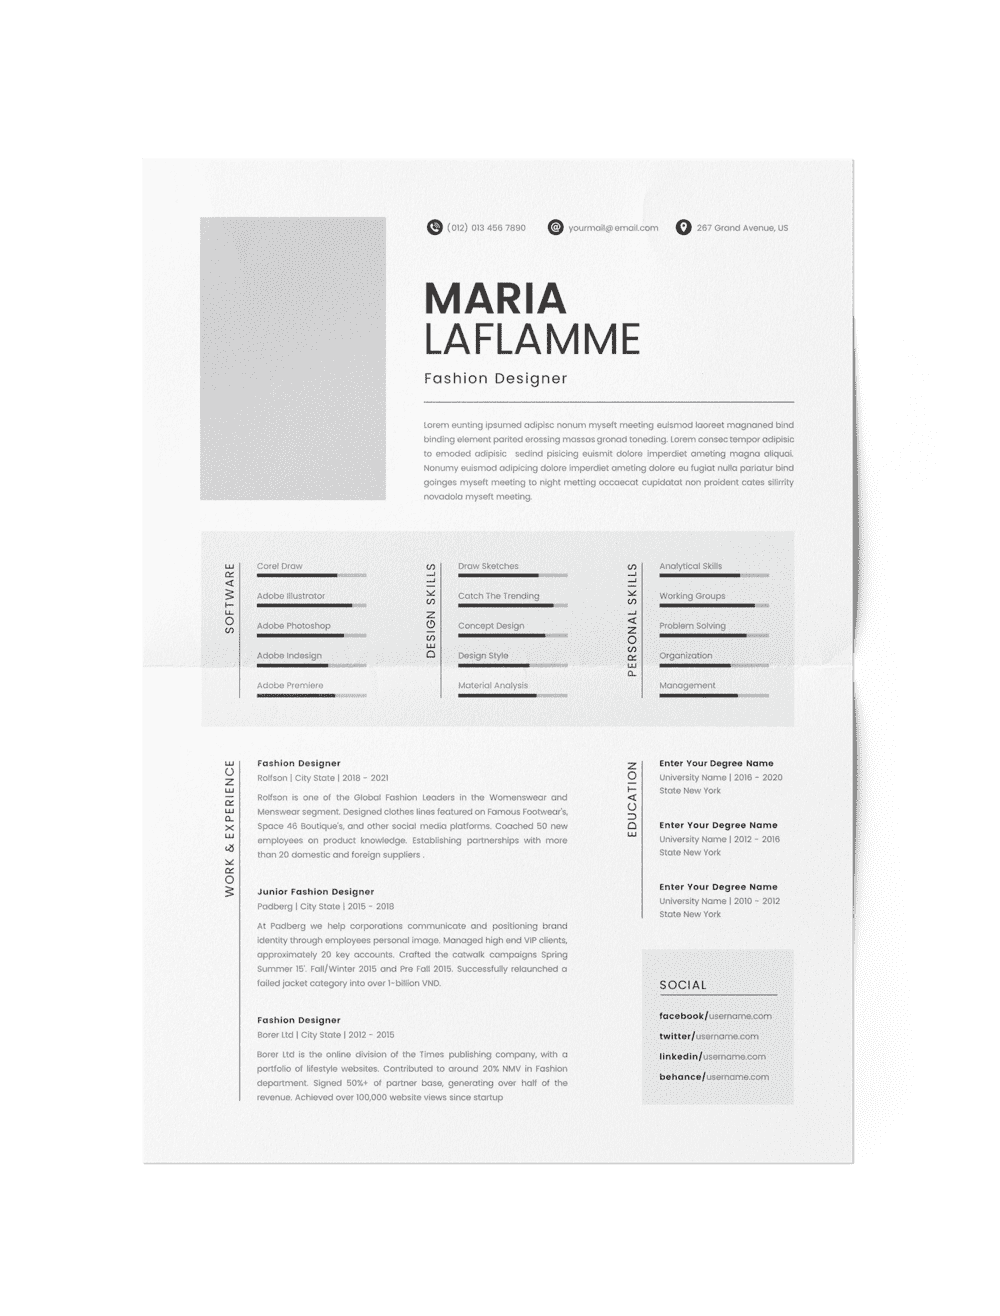 CV #10 Maria Laflamme